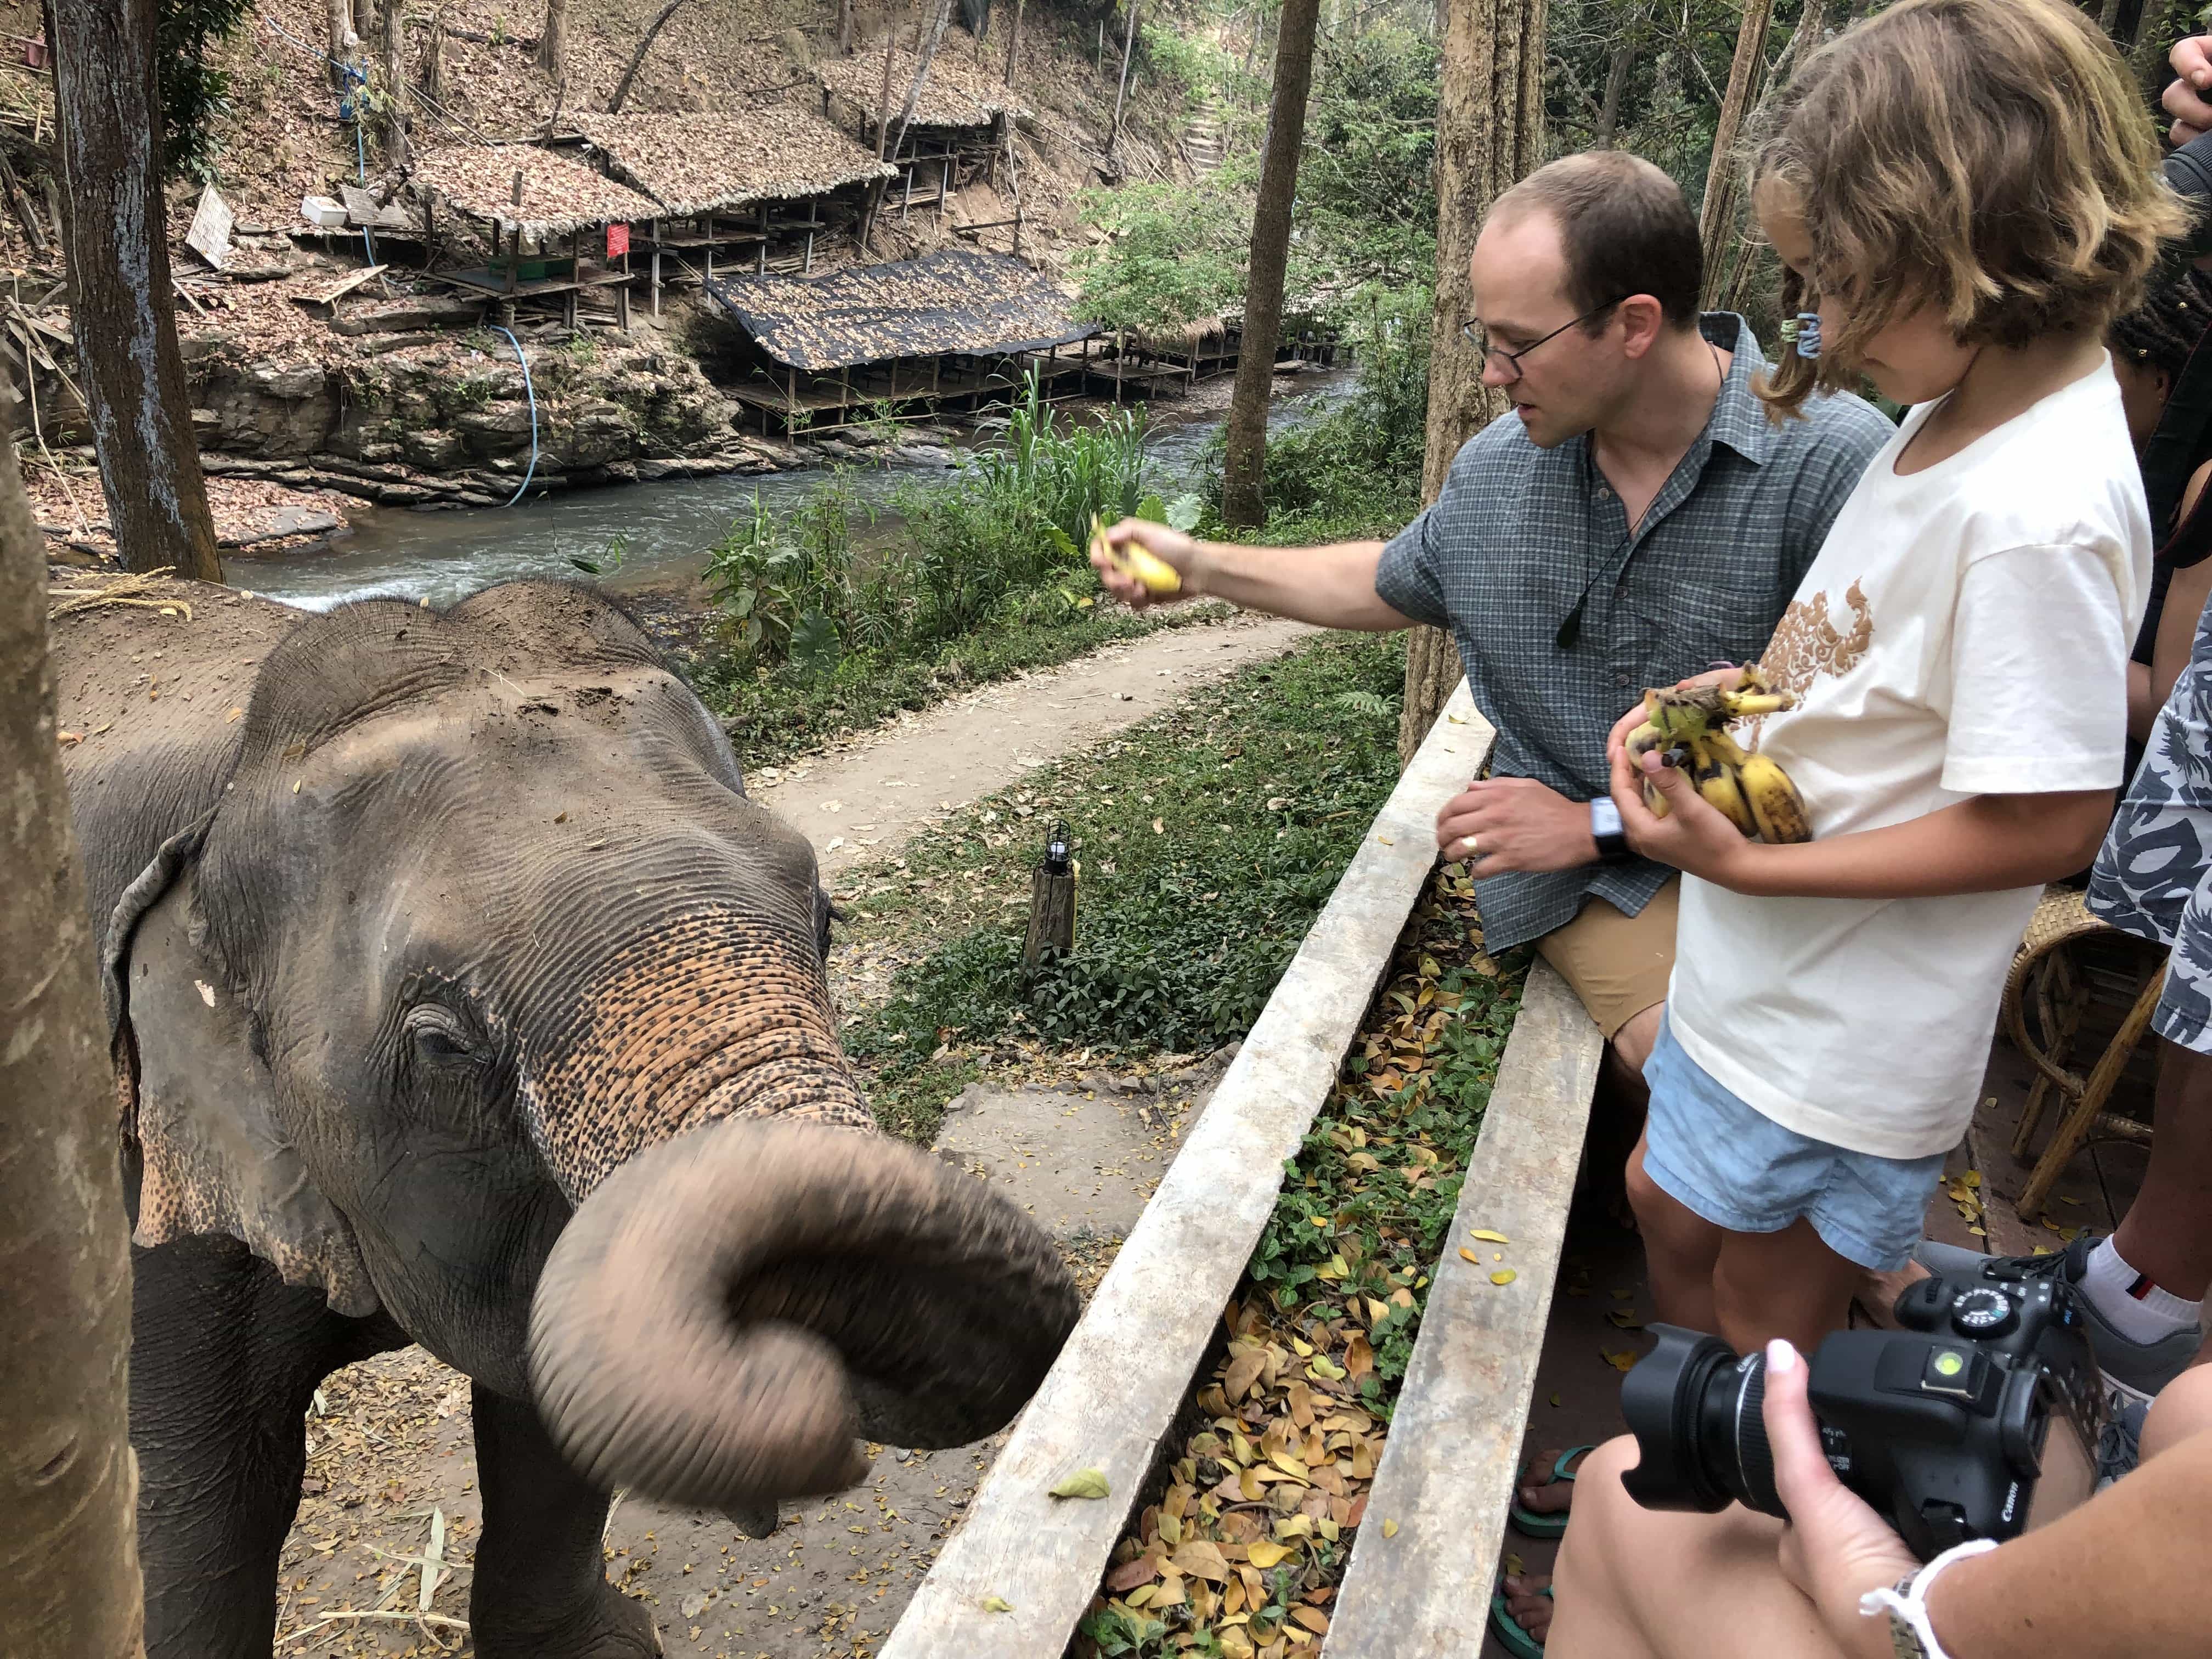 Feeding elephants from the restaurant